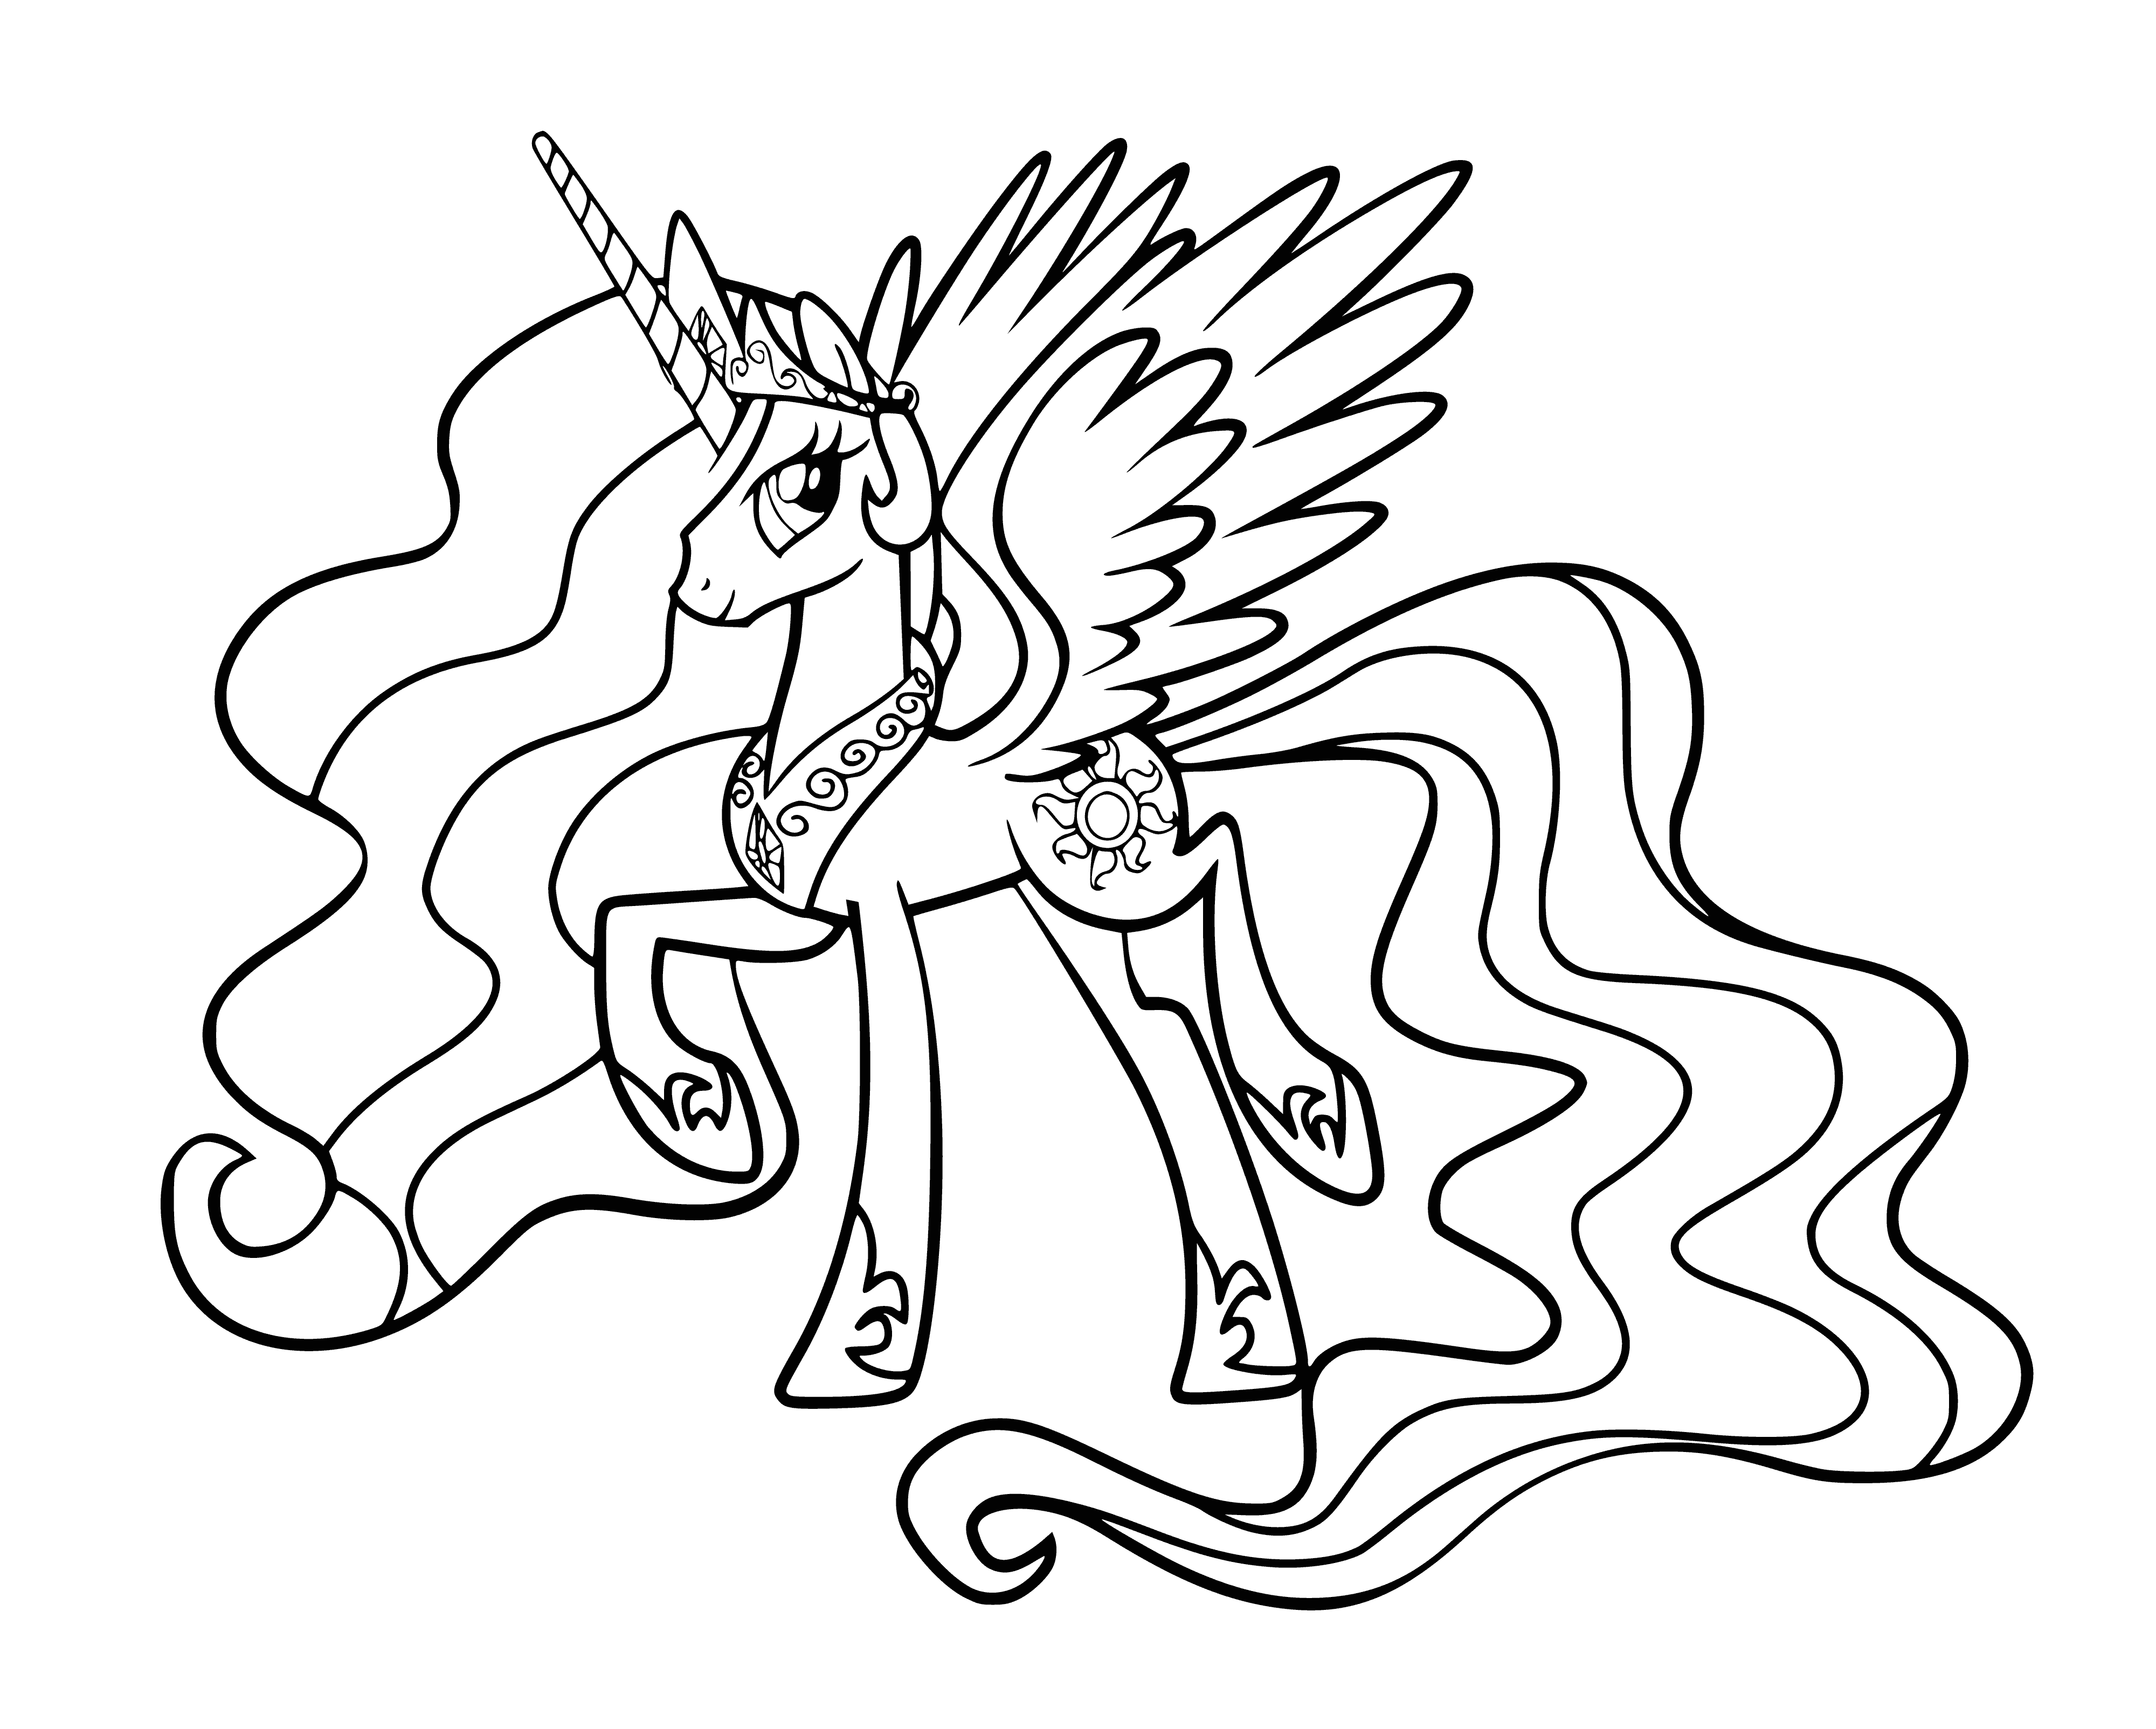 Princess Celestia is an alicorn mare ruling Equestria & mentoring Twilight Sparkle; white w/ long mane & tail, blue eye marking, sun & star cutie mark.